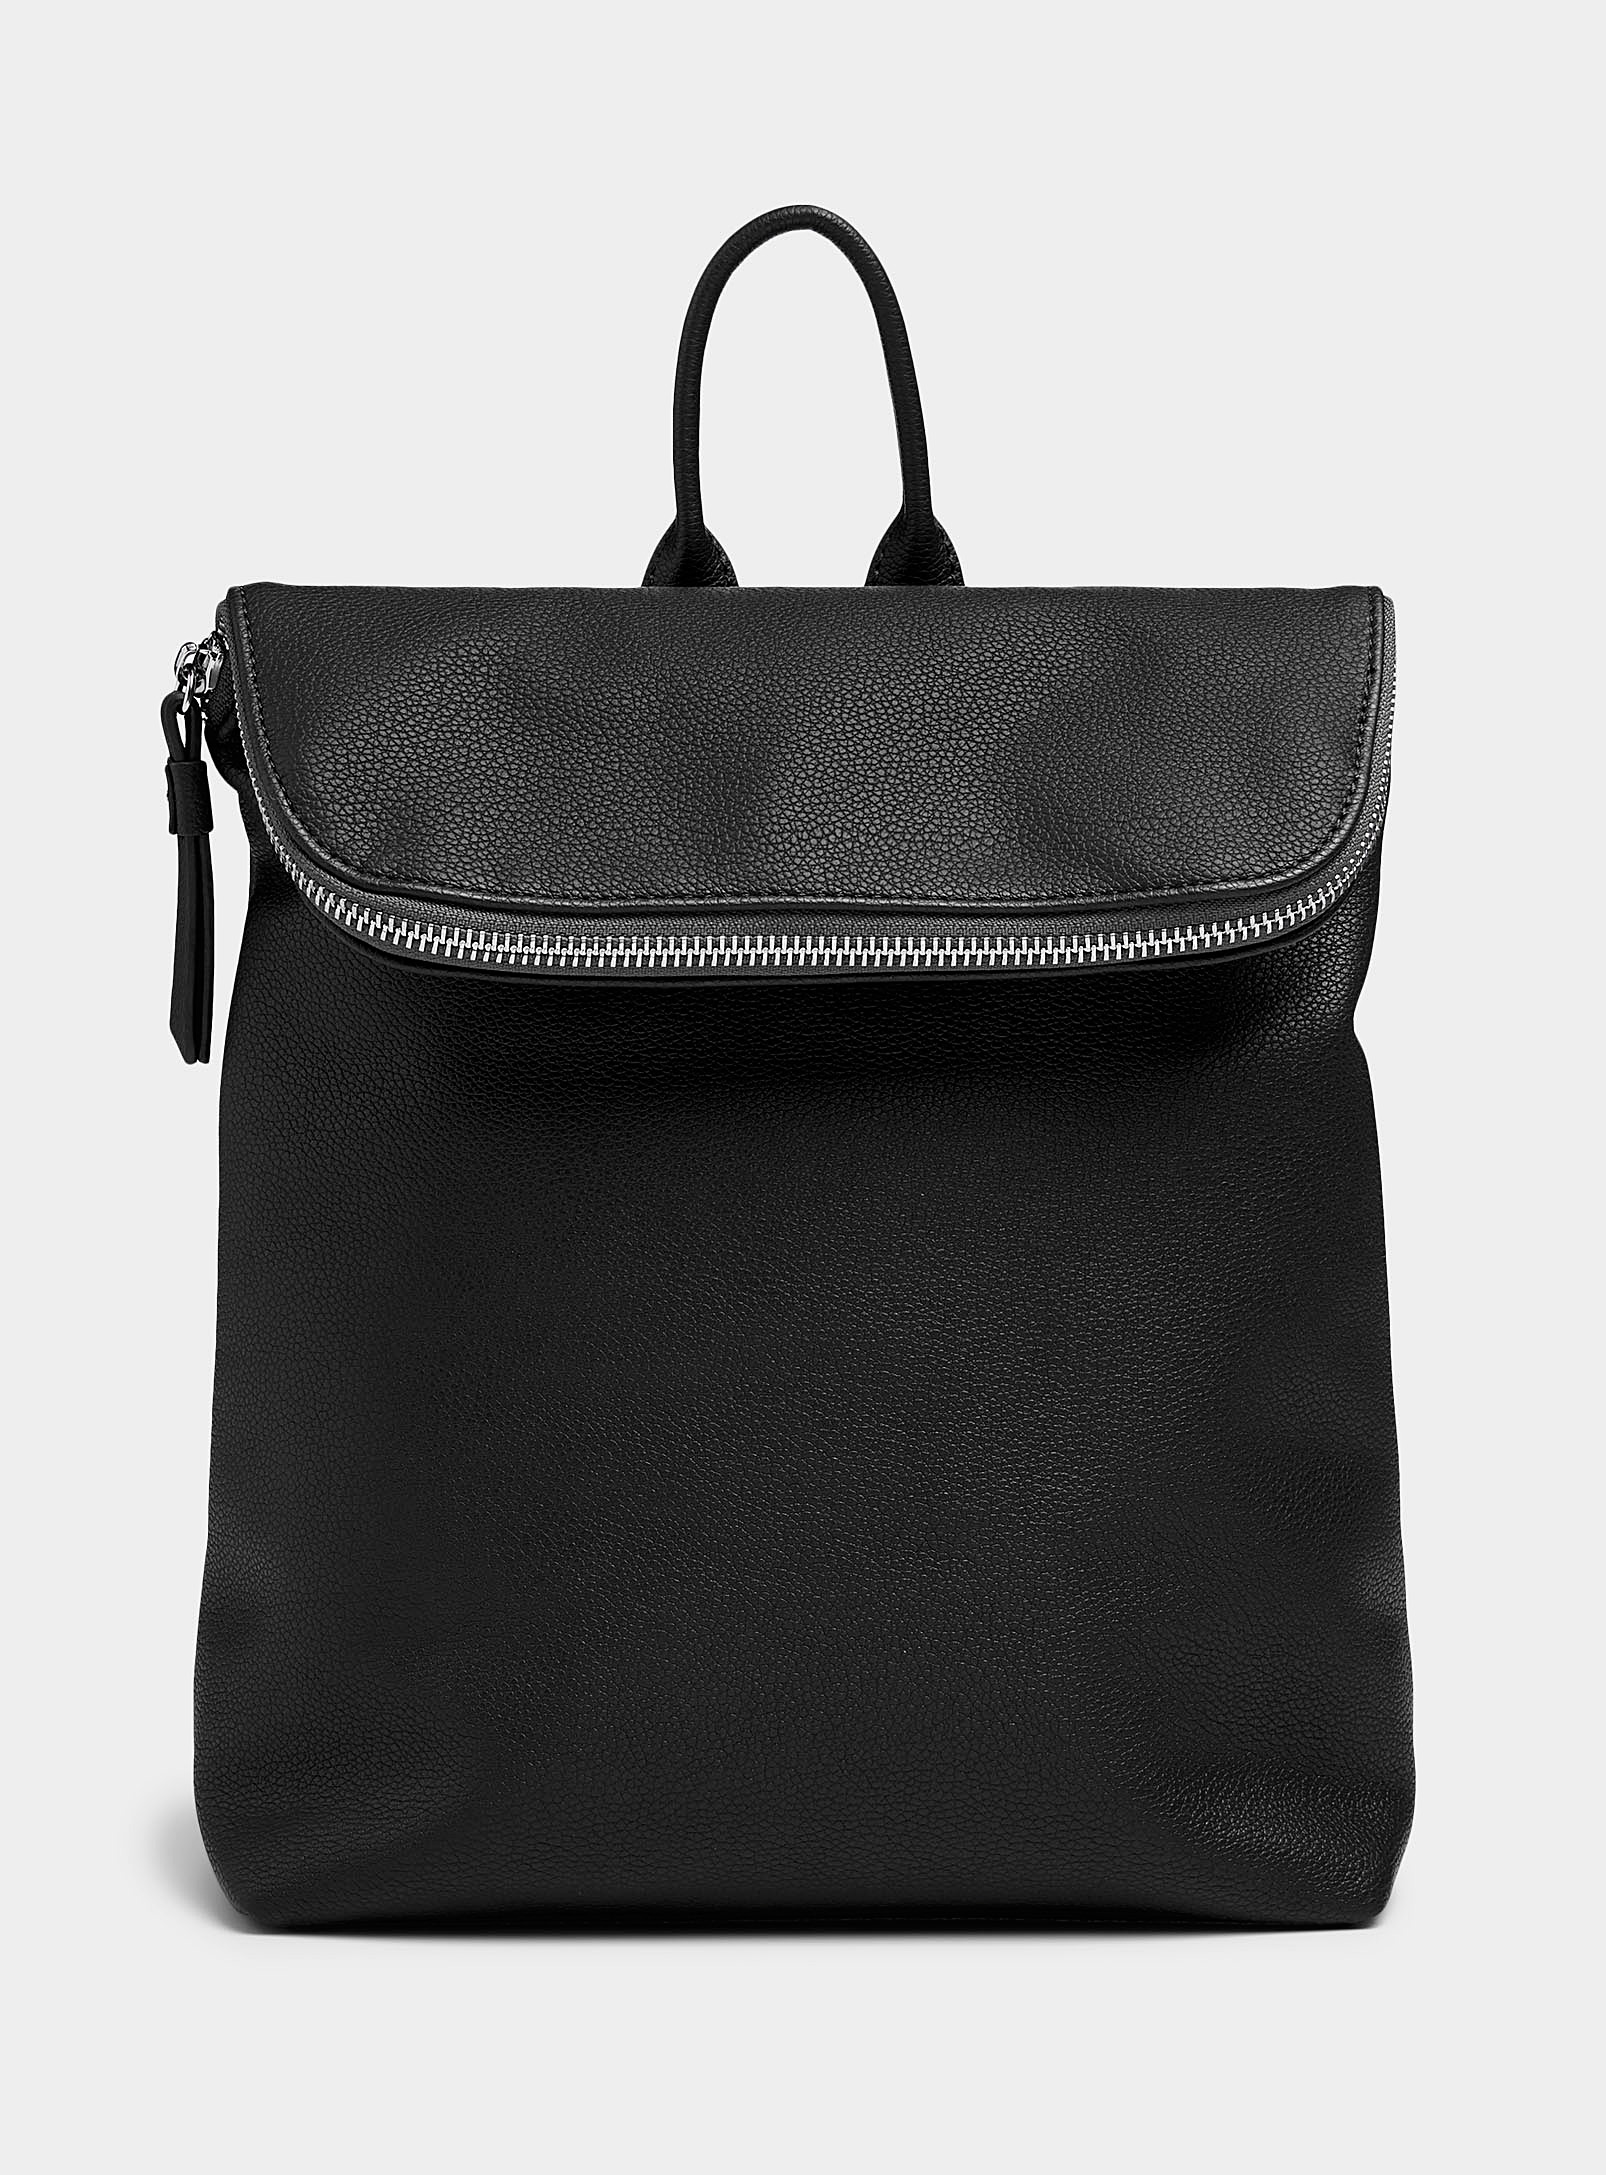 Simons - Le petit sac à dos rabat zippé minimaliste